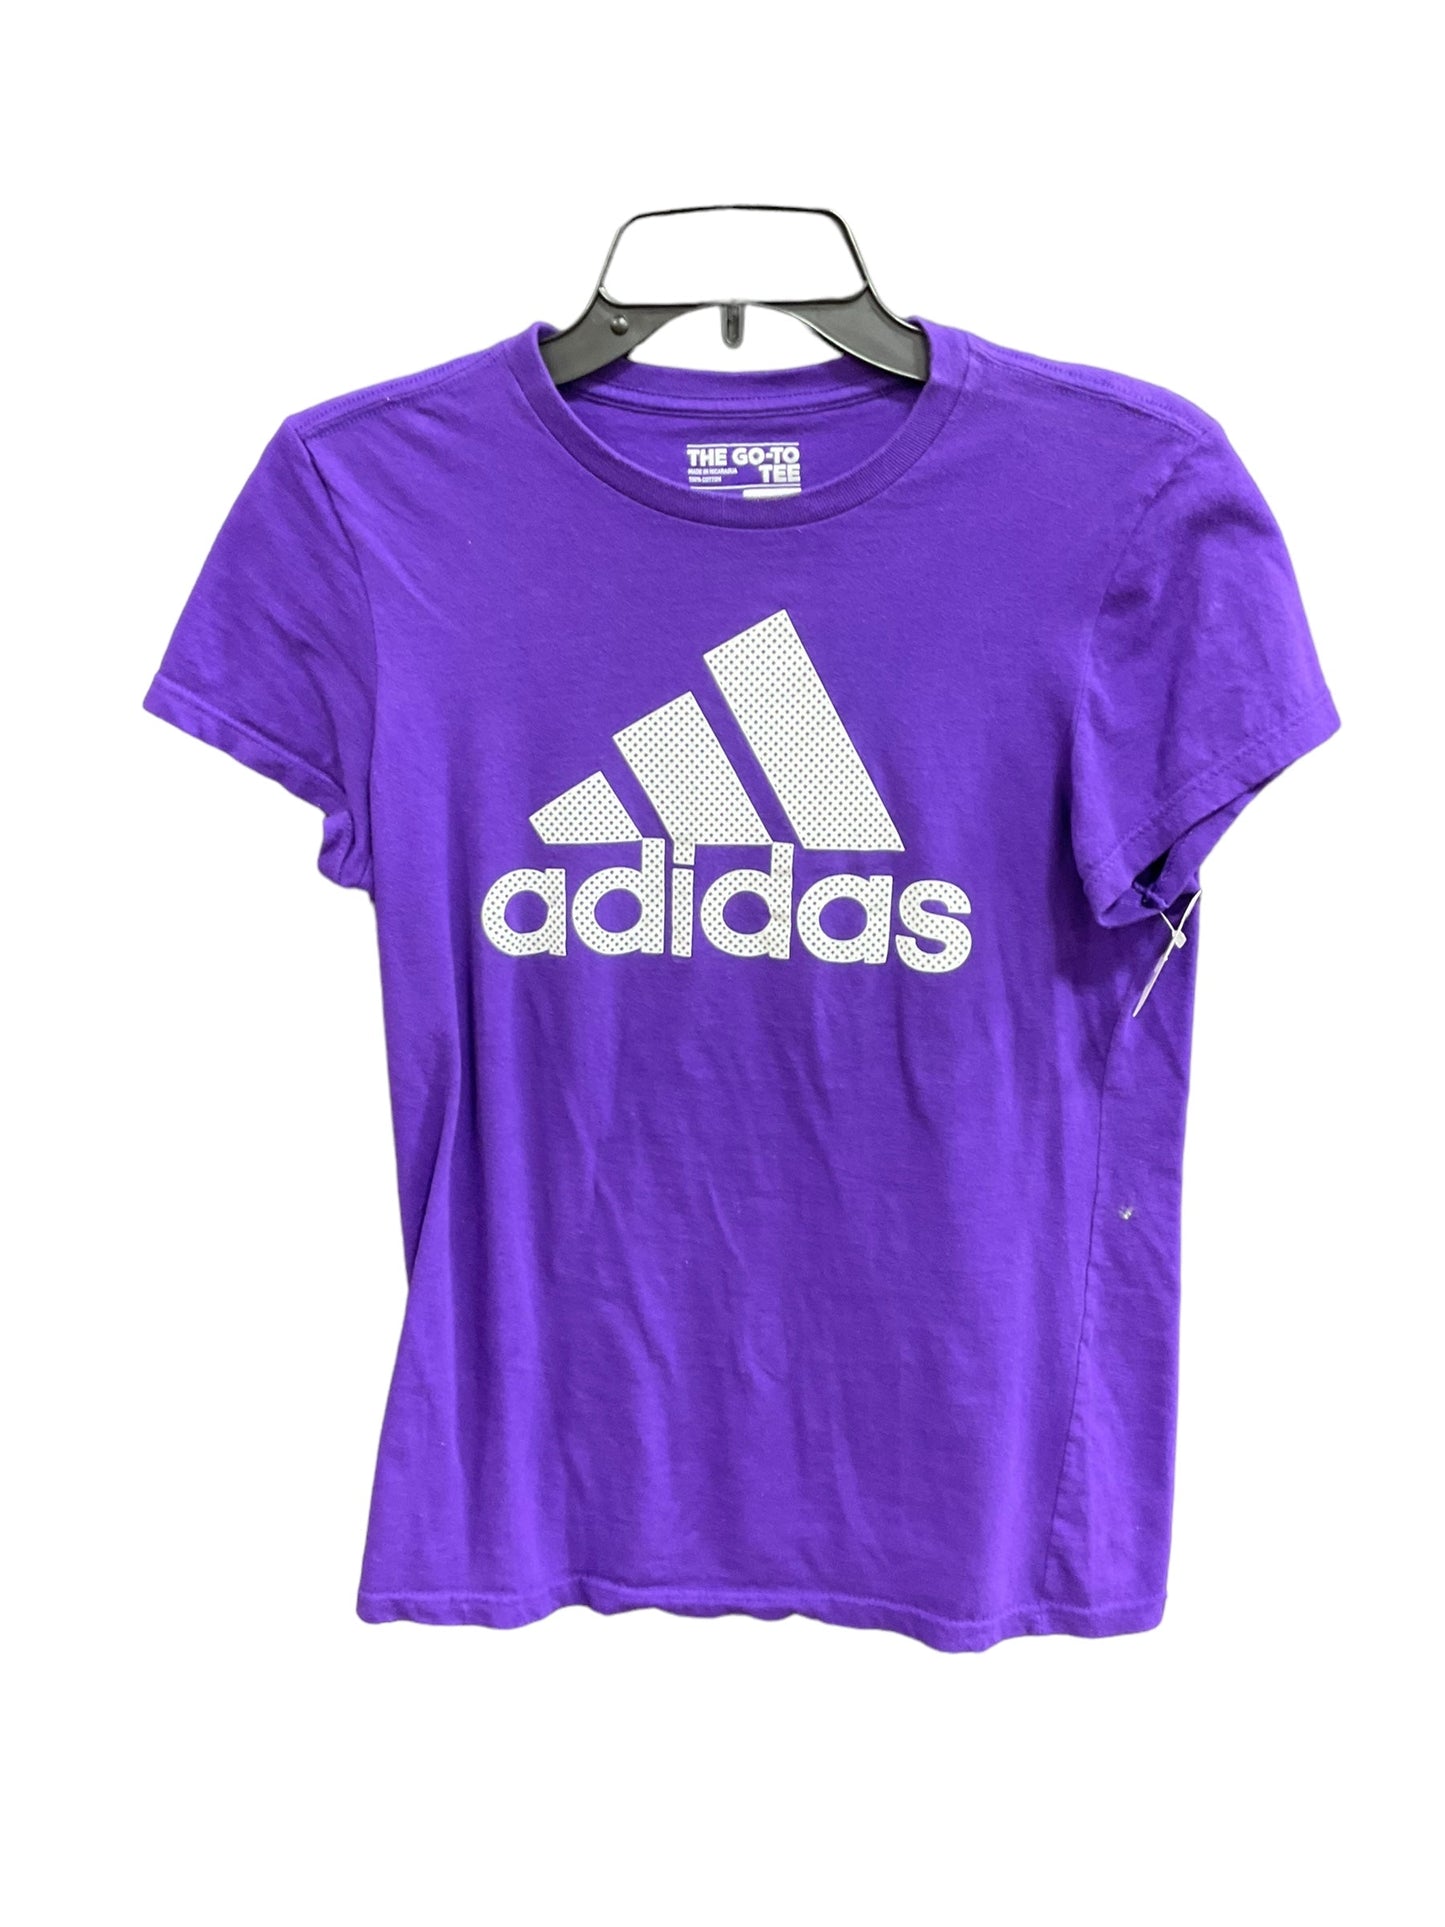 Purple Athletic Top Short Sleeve Adidas, Size S